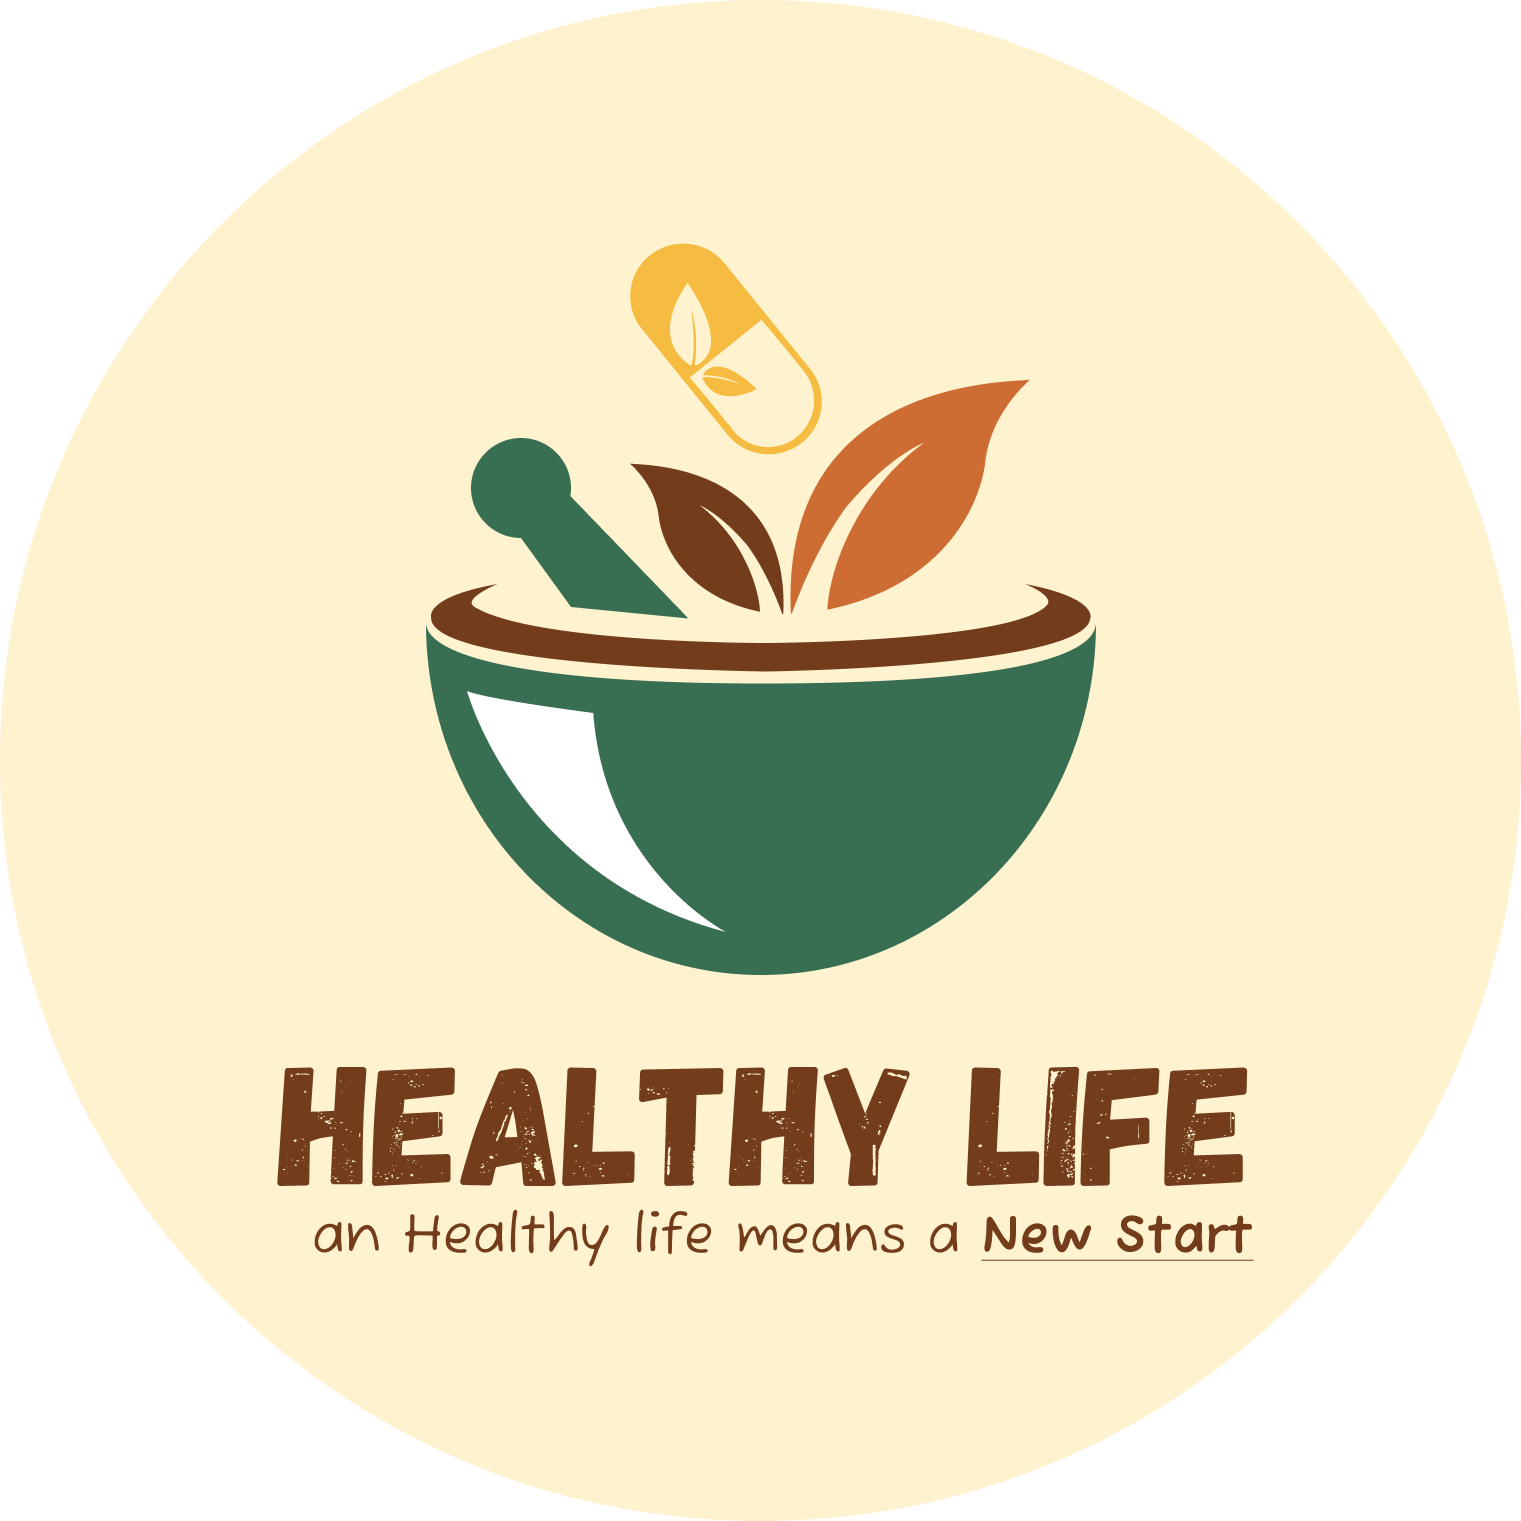 Healthy Life - New Start logo symbolizing a fresh start towards a healthy lifestyle.